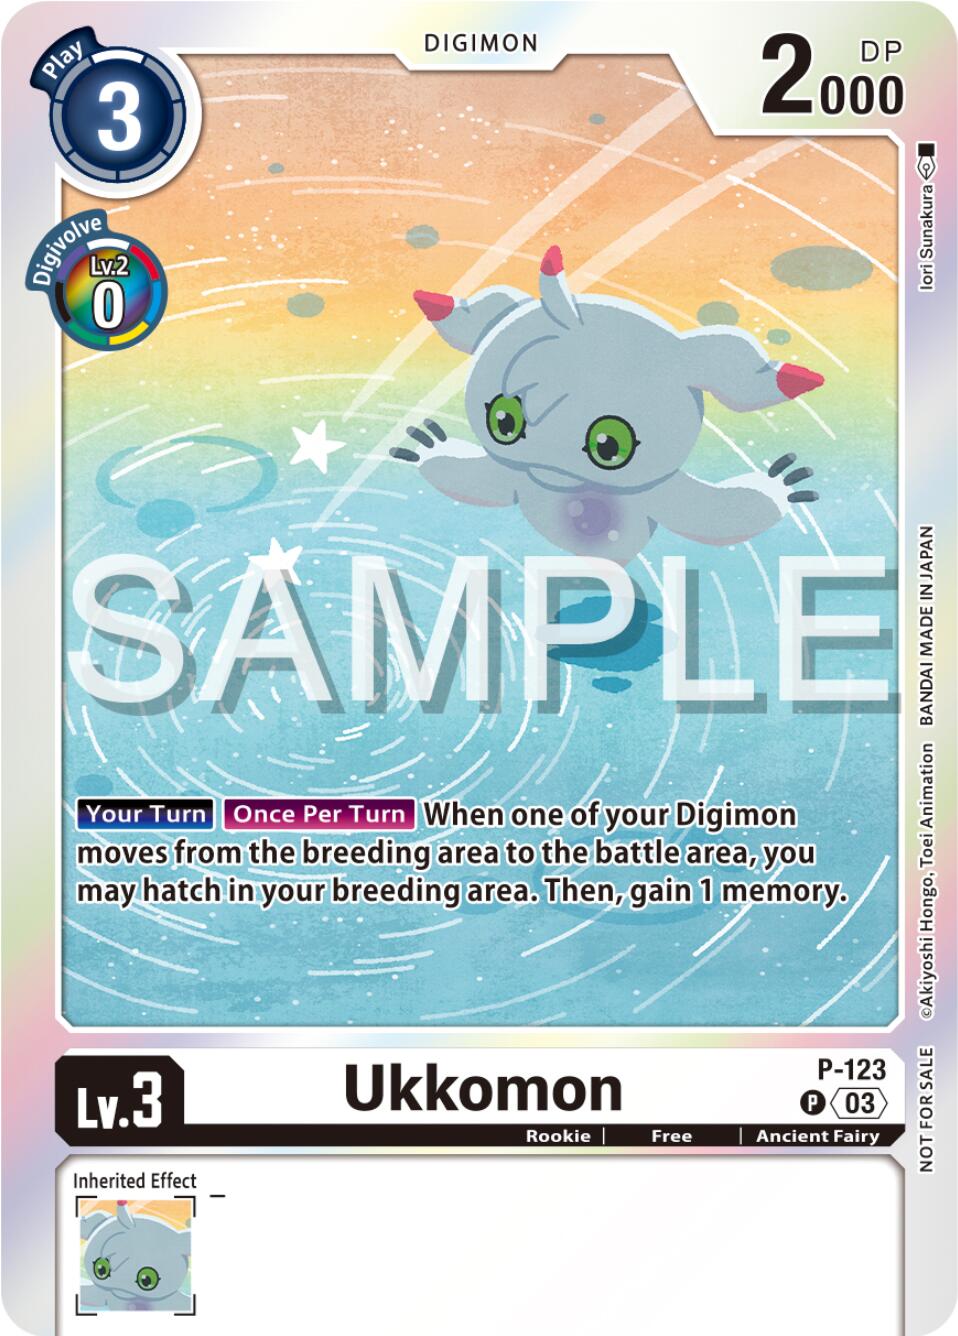 Ukkomon [P-123] (Beginning Observer Pre-Release Winner) [Promotional Cards]